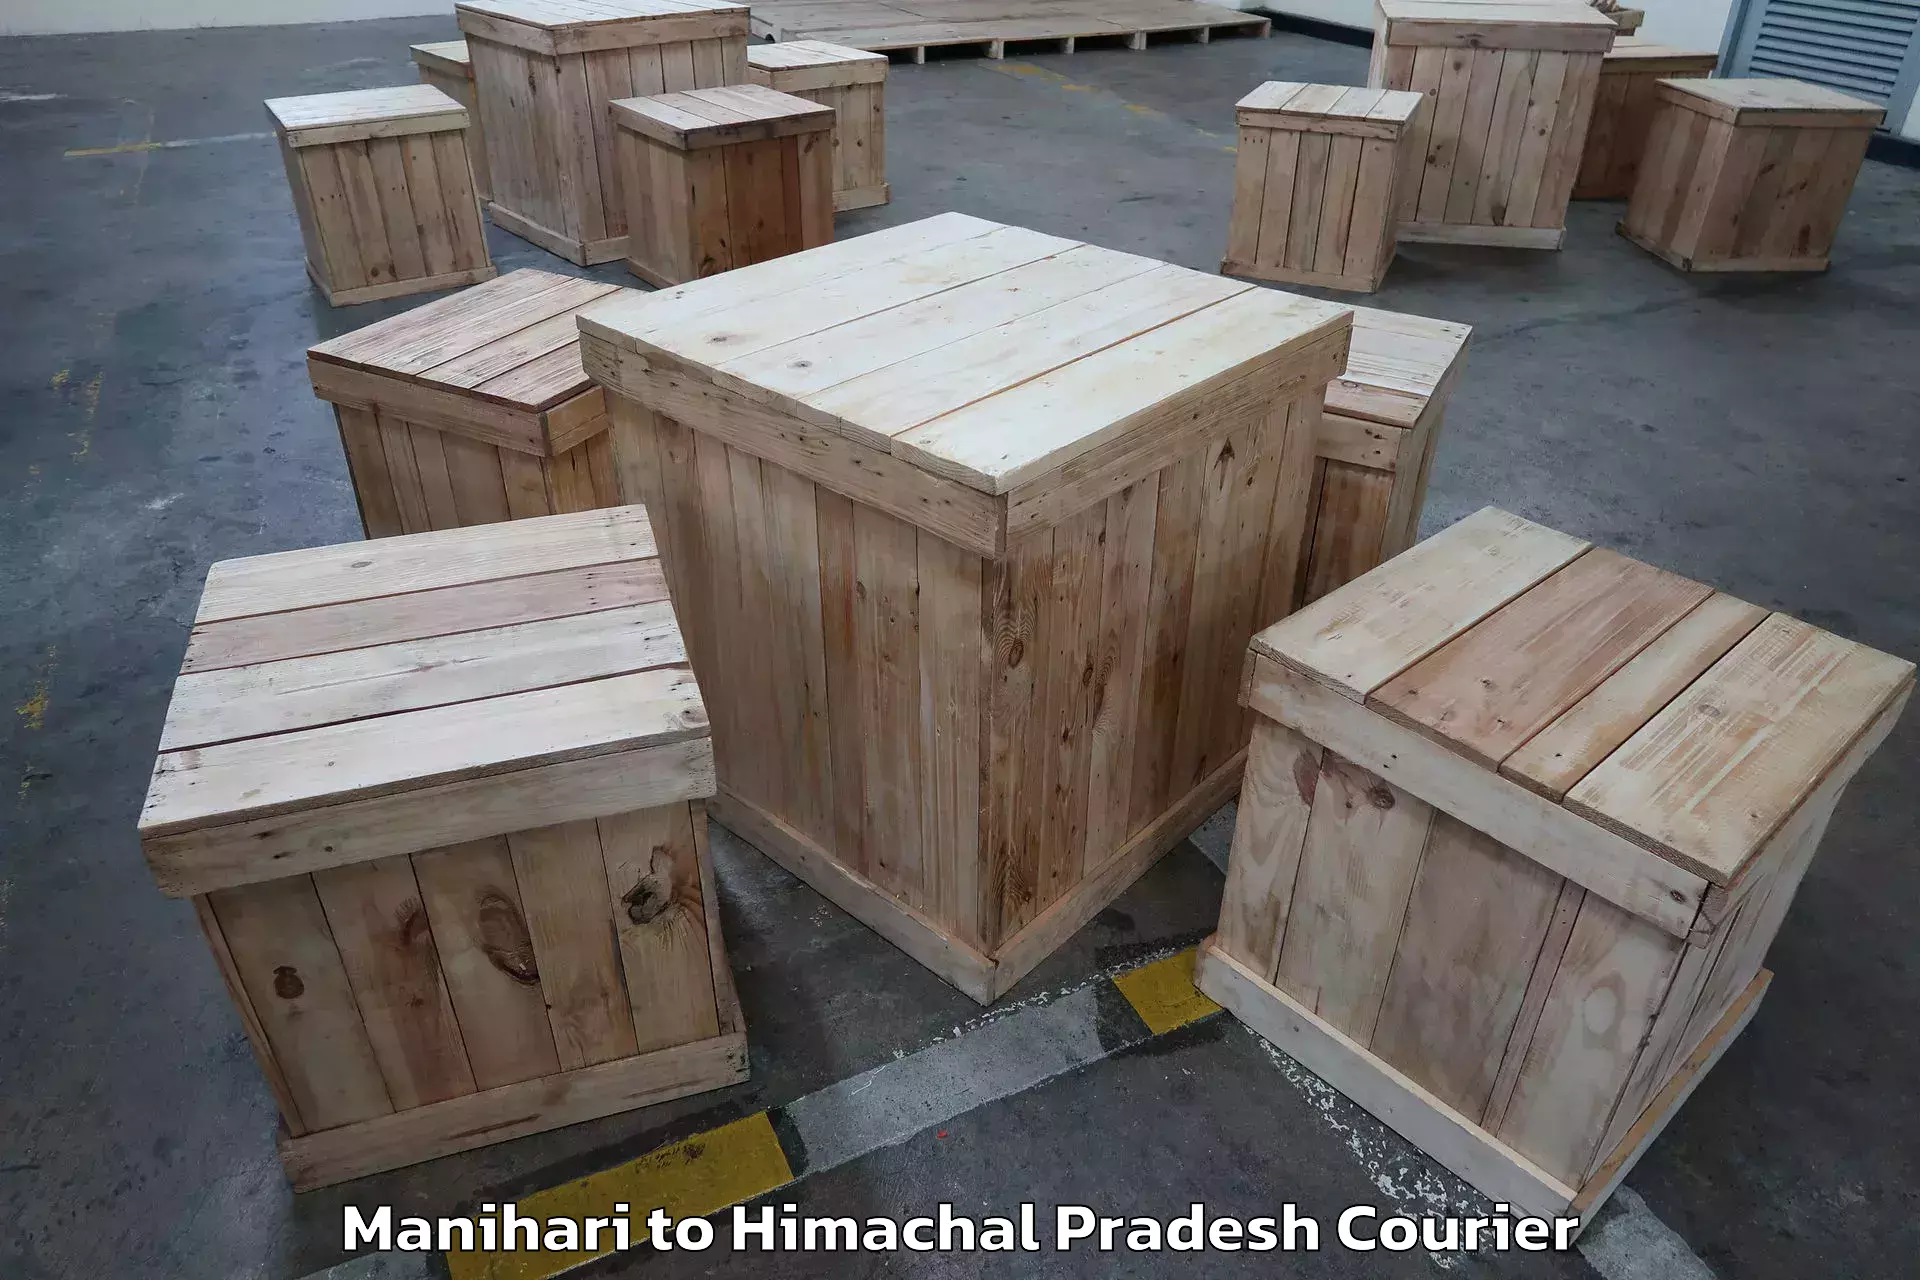 Moving and packing experts Manihari to Dheera